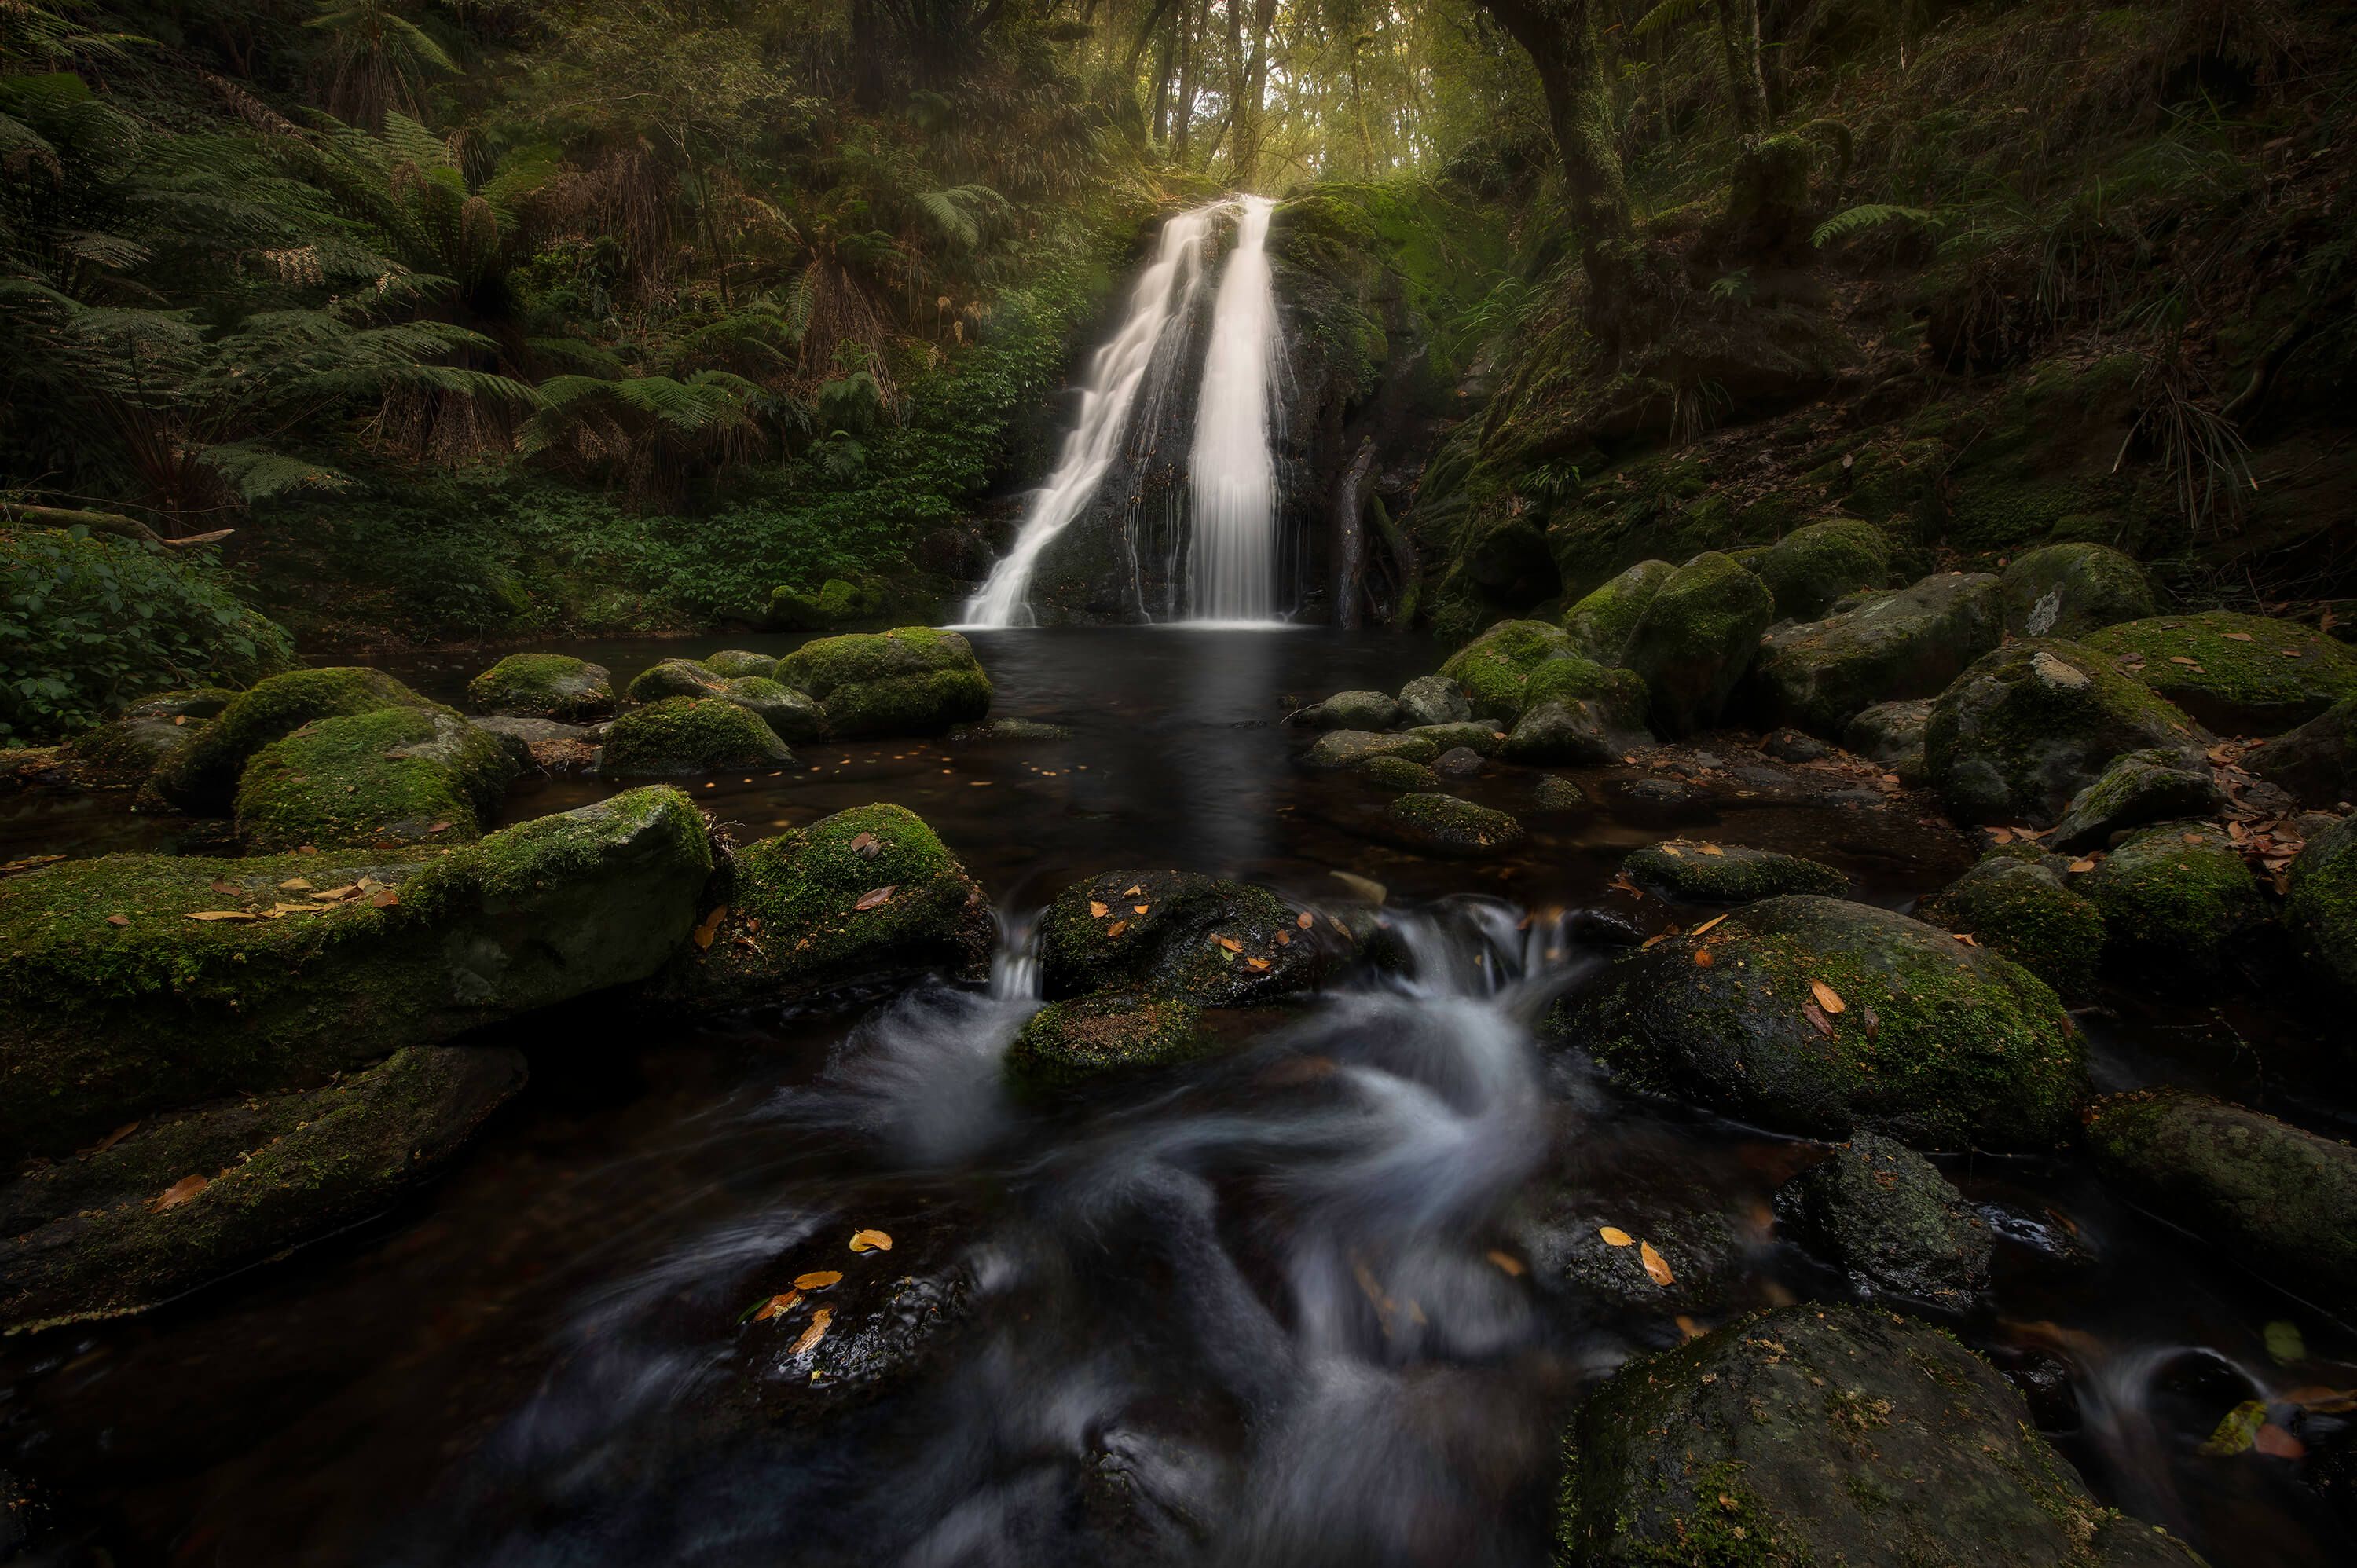  A Graceful Waterfall